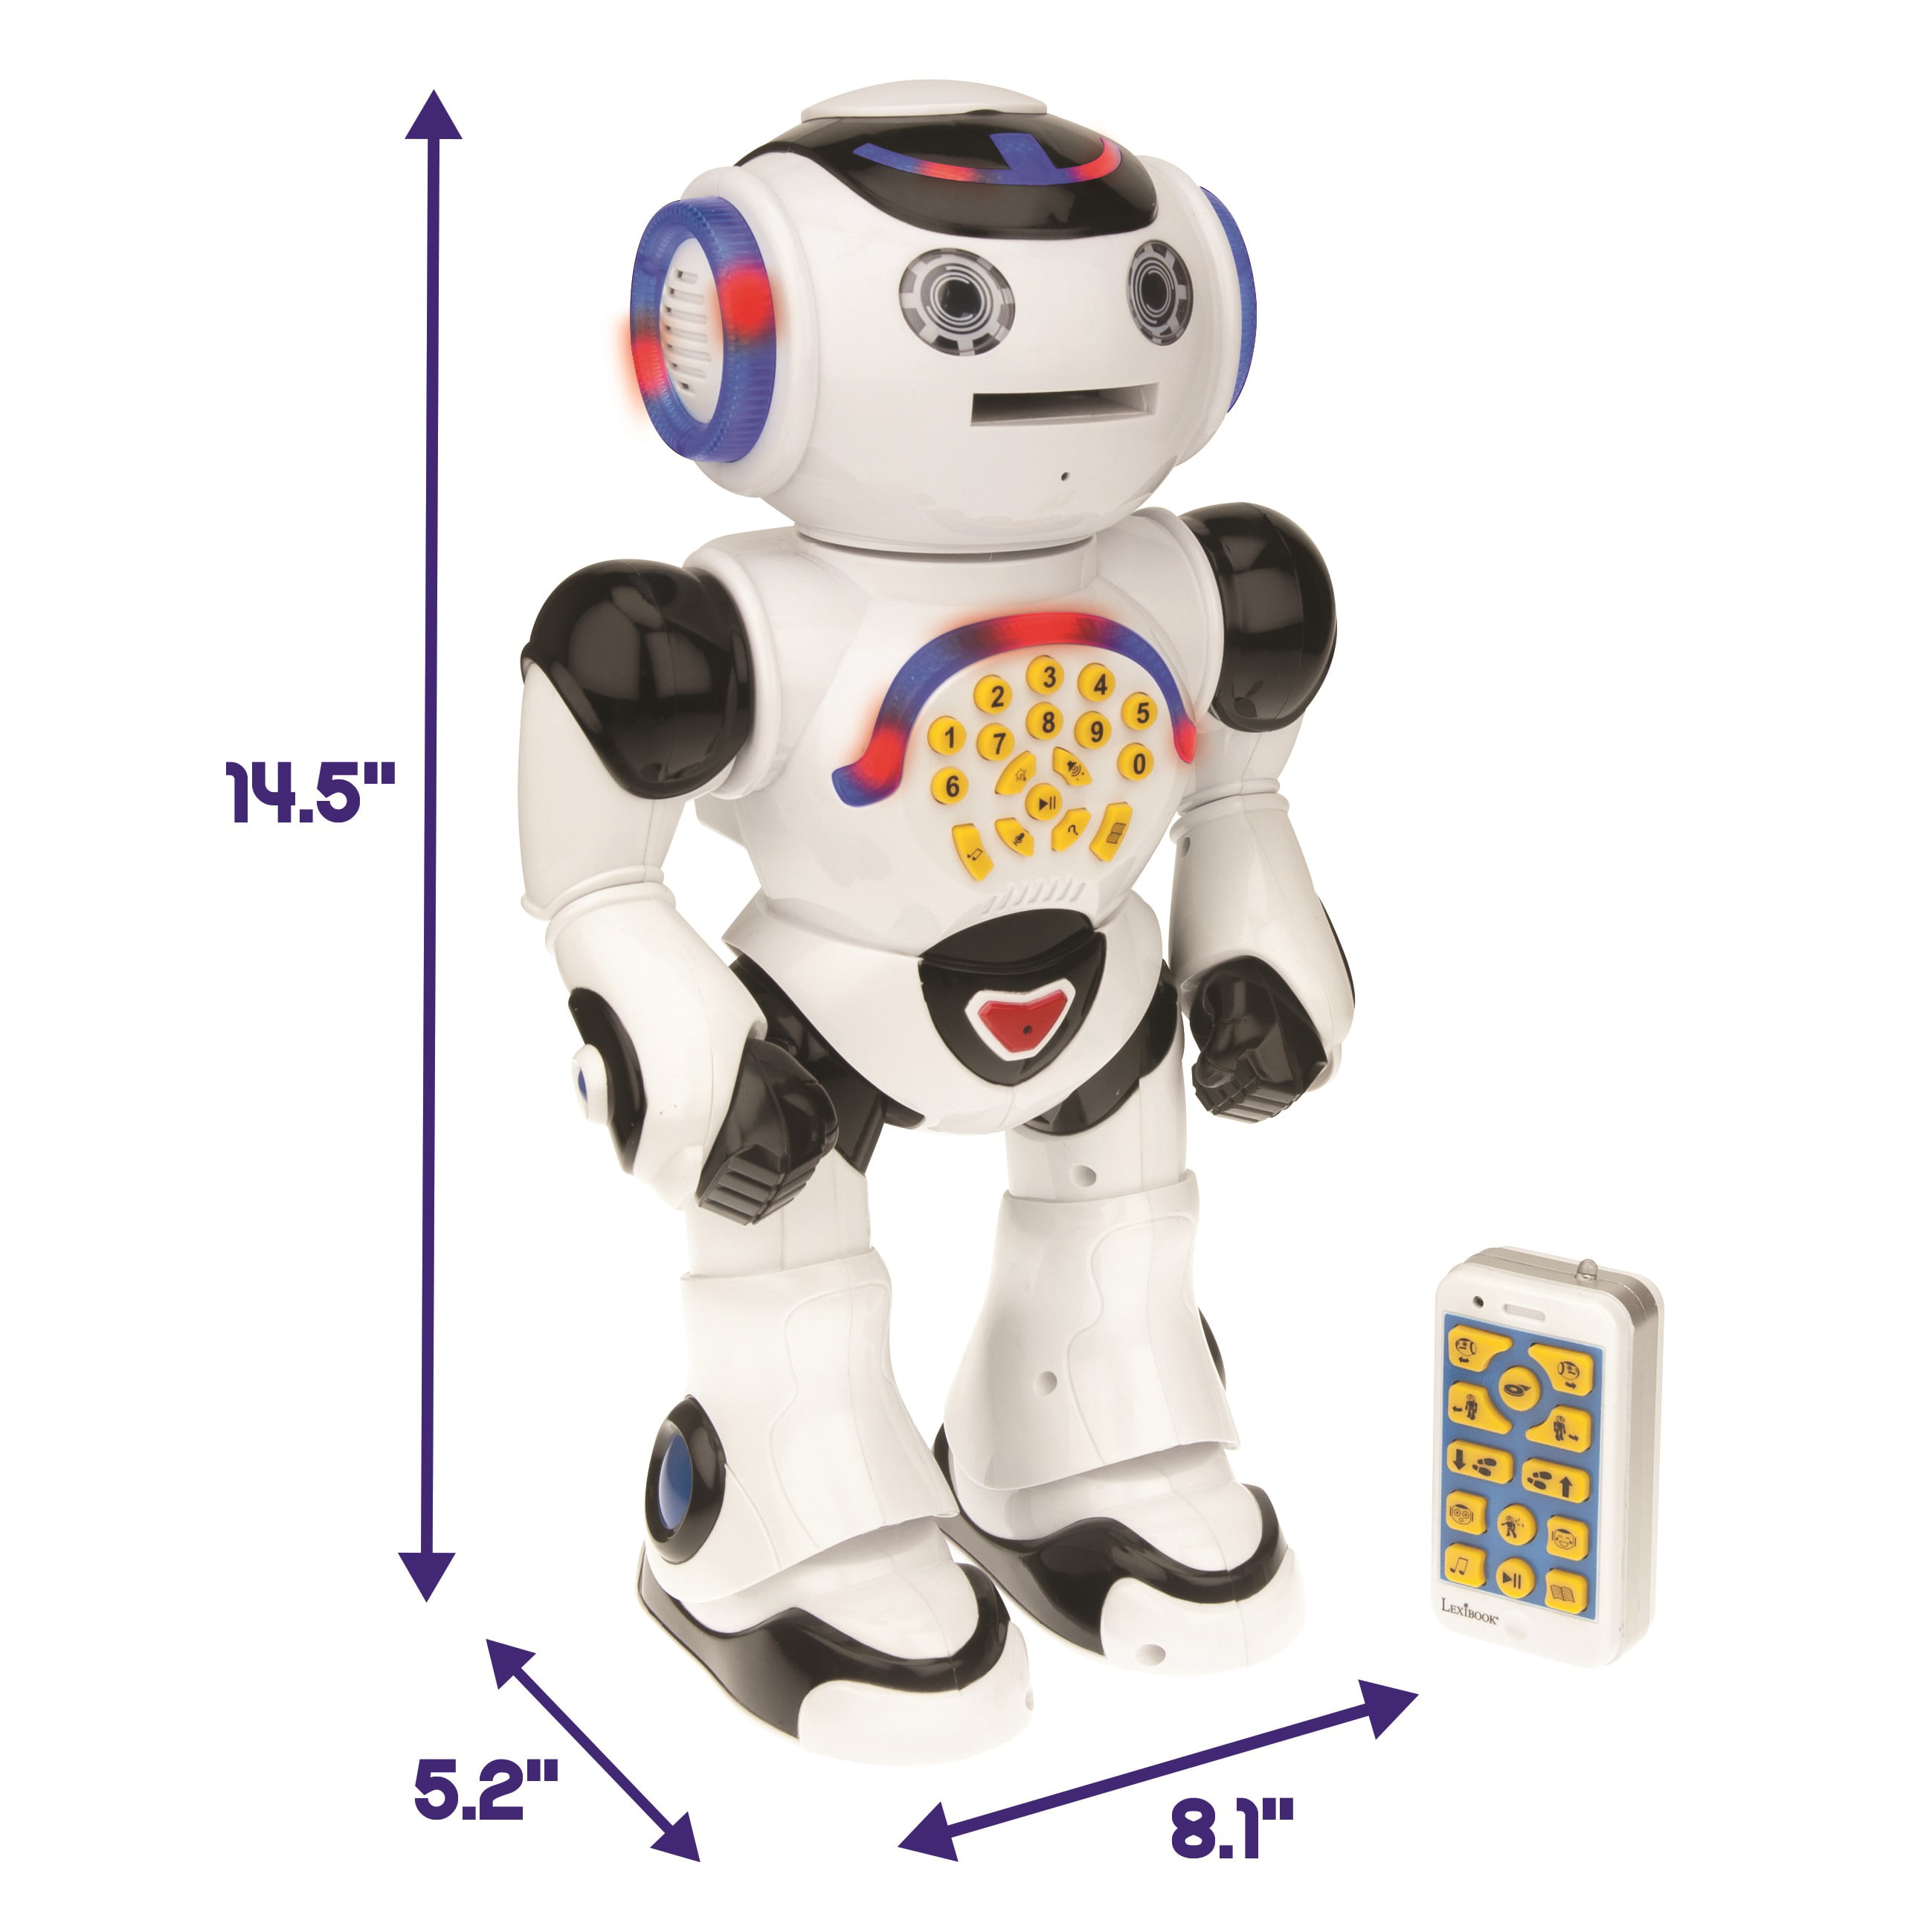 LEXiBOOK Powerman ROB50US Shooting Discs Remote Control Walking Talking Toy Robot Dances Sings for Kids 4+ and Voice Mimicking Math Quiz Reads Stories 